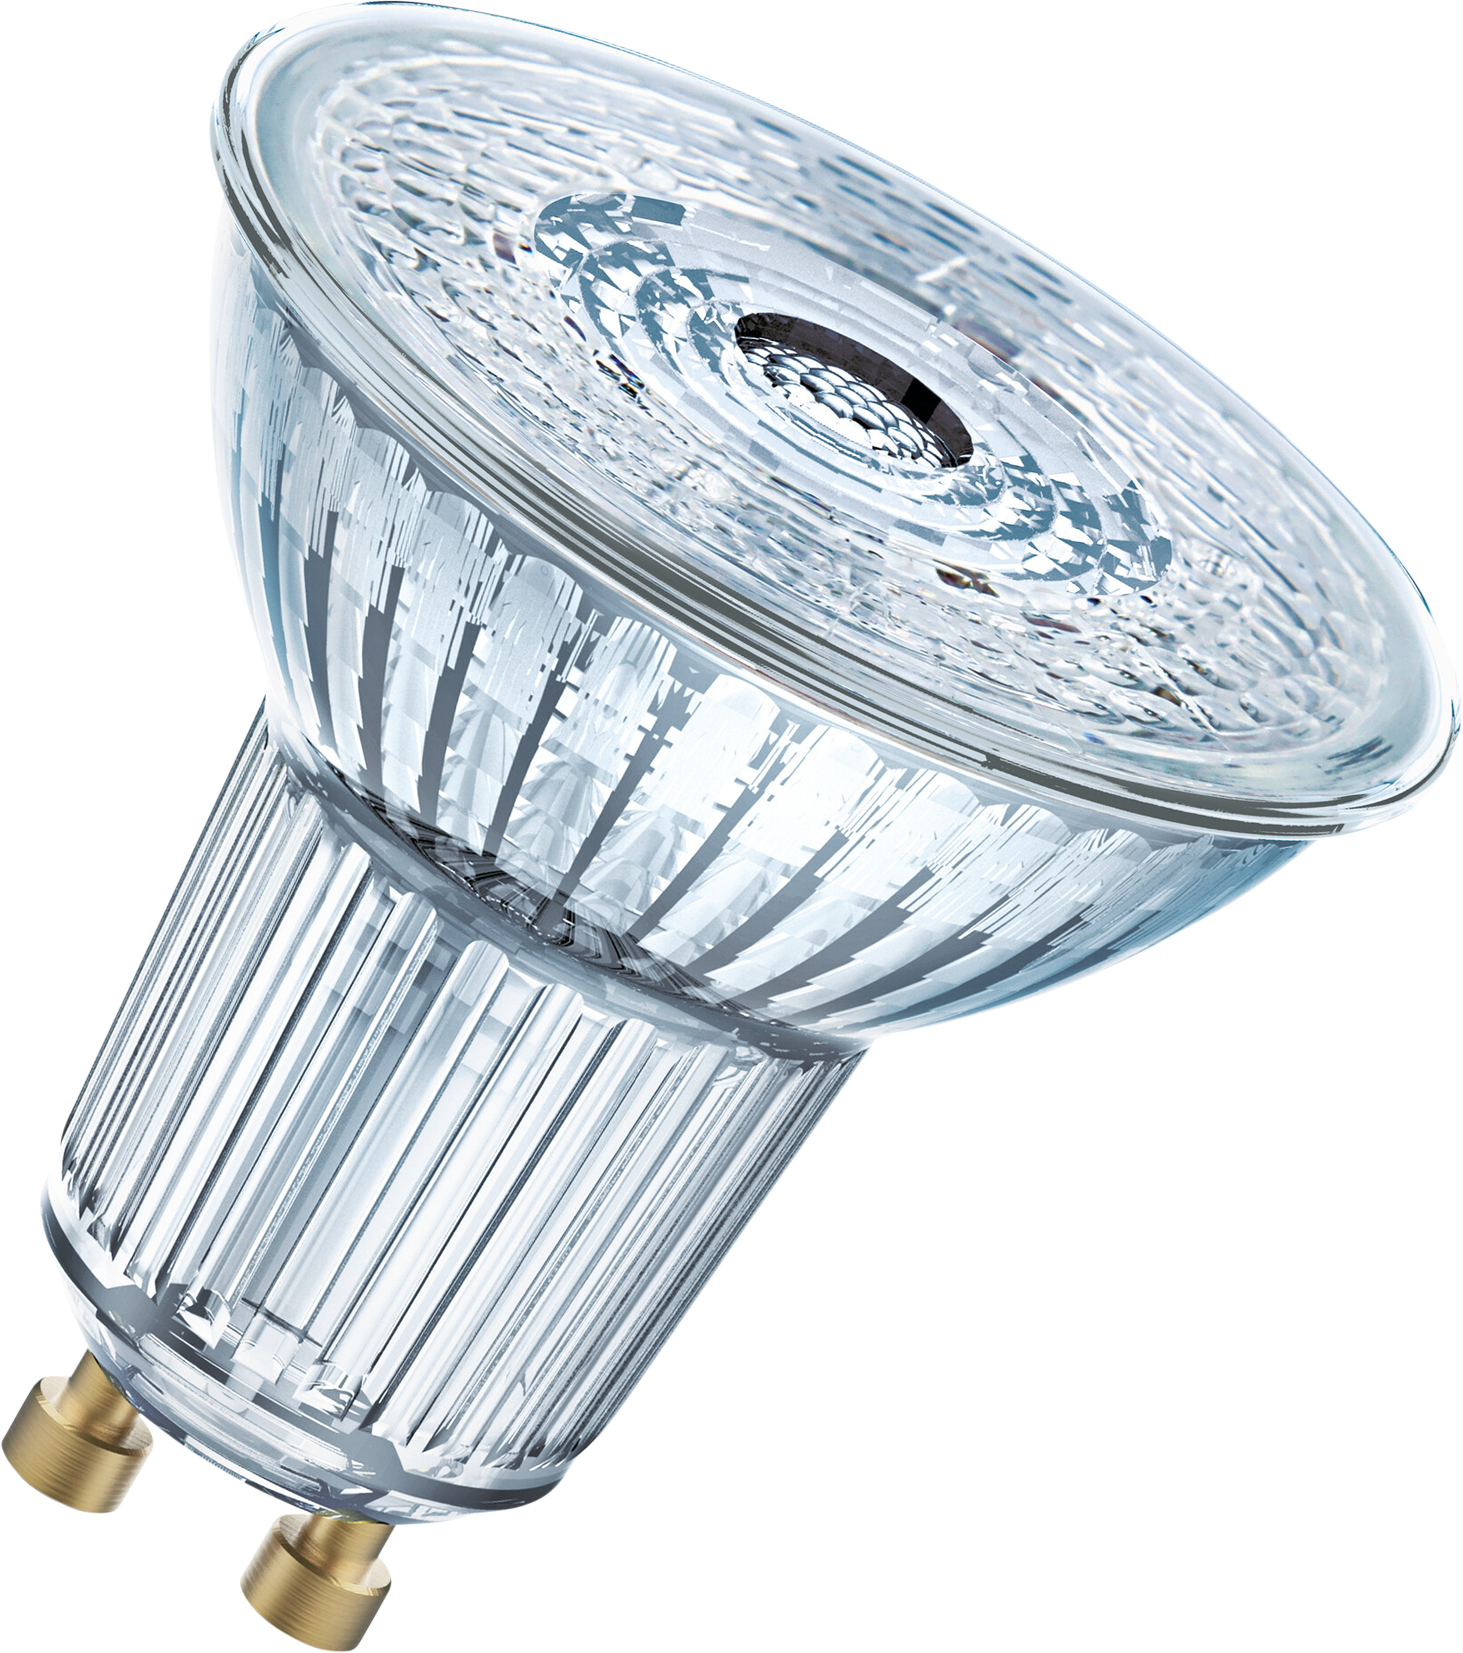 OSRAM LED-Lampe Star MR16 GU5.3, 3.8W, 345lm, warmweiss - Lampen, Leuchten